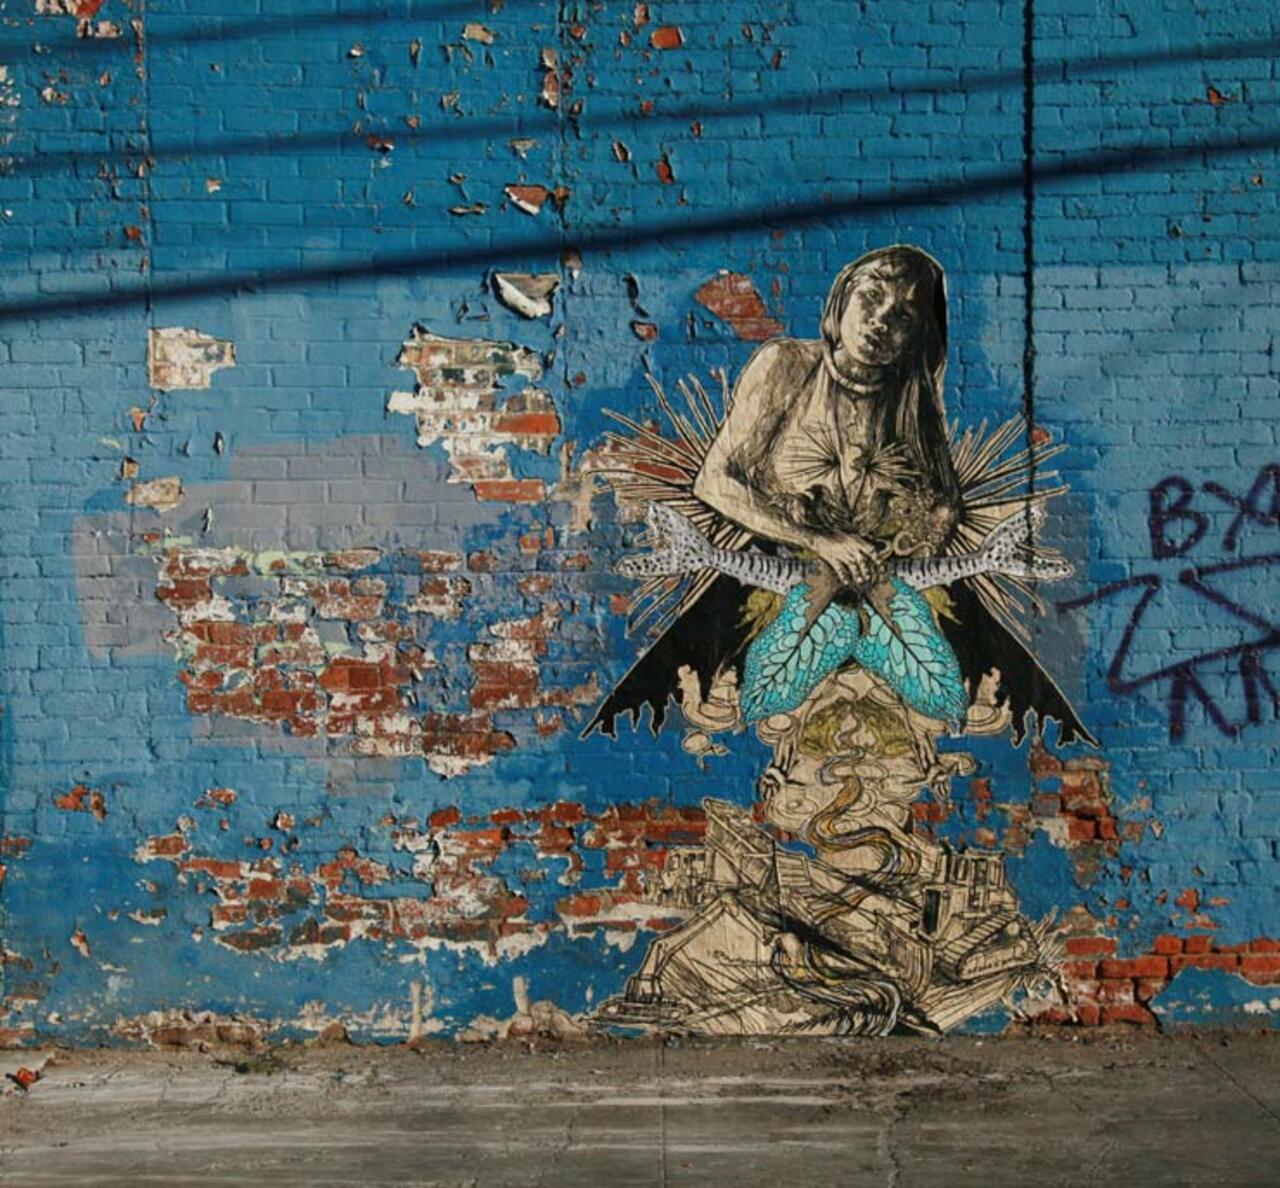 BSA | New SWOON Storytelling on Battered Brooklyn Walls
http://www.brooklynstreetart.com/theblog/2015/10/26/new-swoon-storytelling-on-battered-brooklyn-walls/
#streetart #urbanart #graffiti https://t.co/kwGCzDrUmp